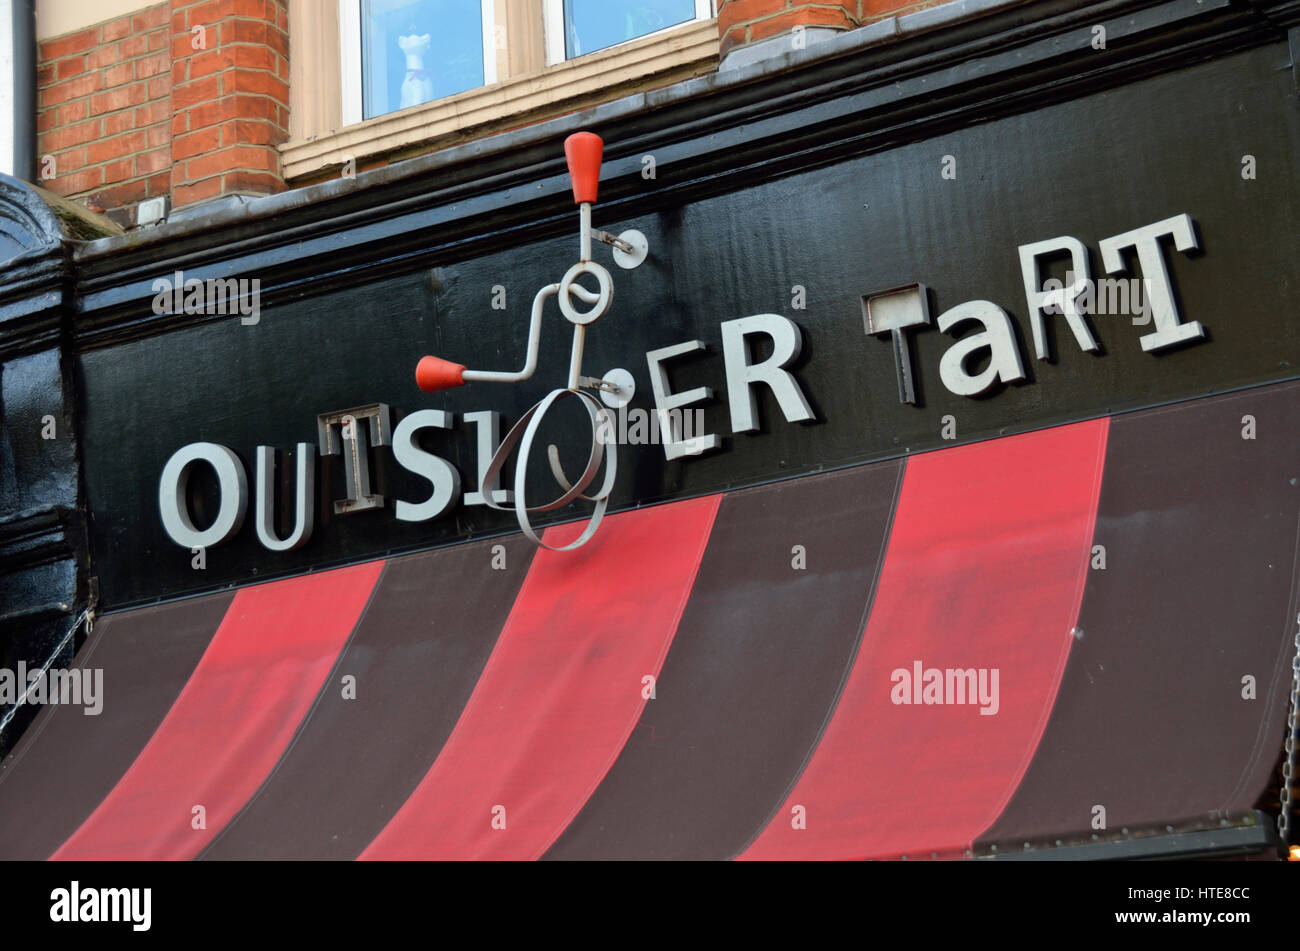 Outsider Tart cake shop in Chiswick, London, UK. Stock Photo